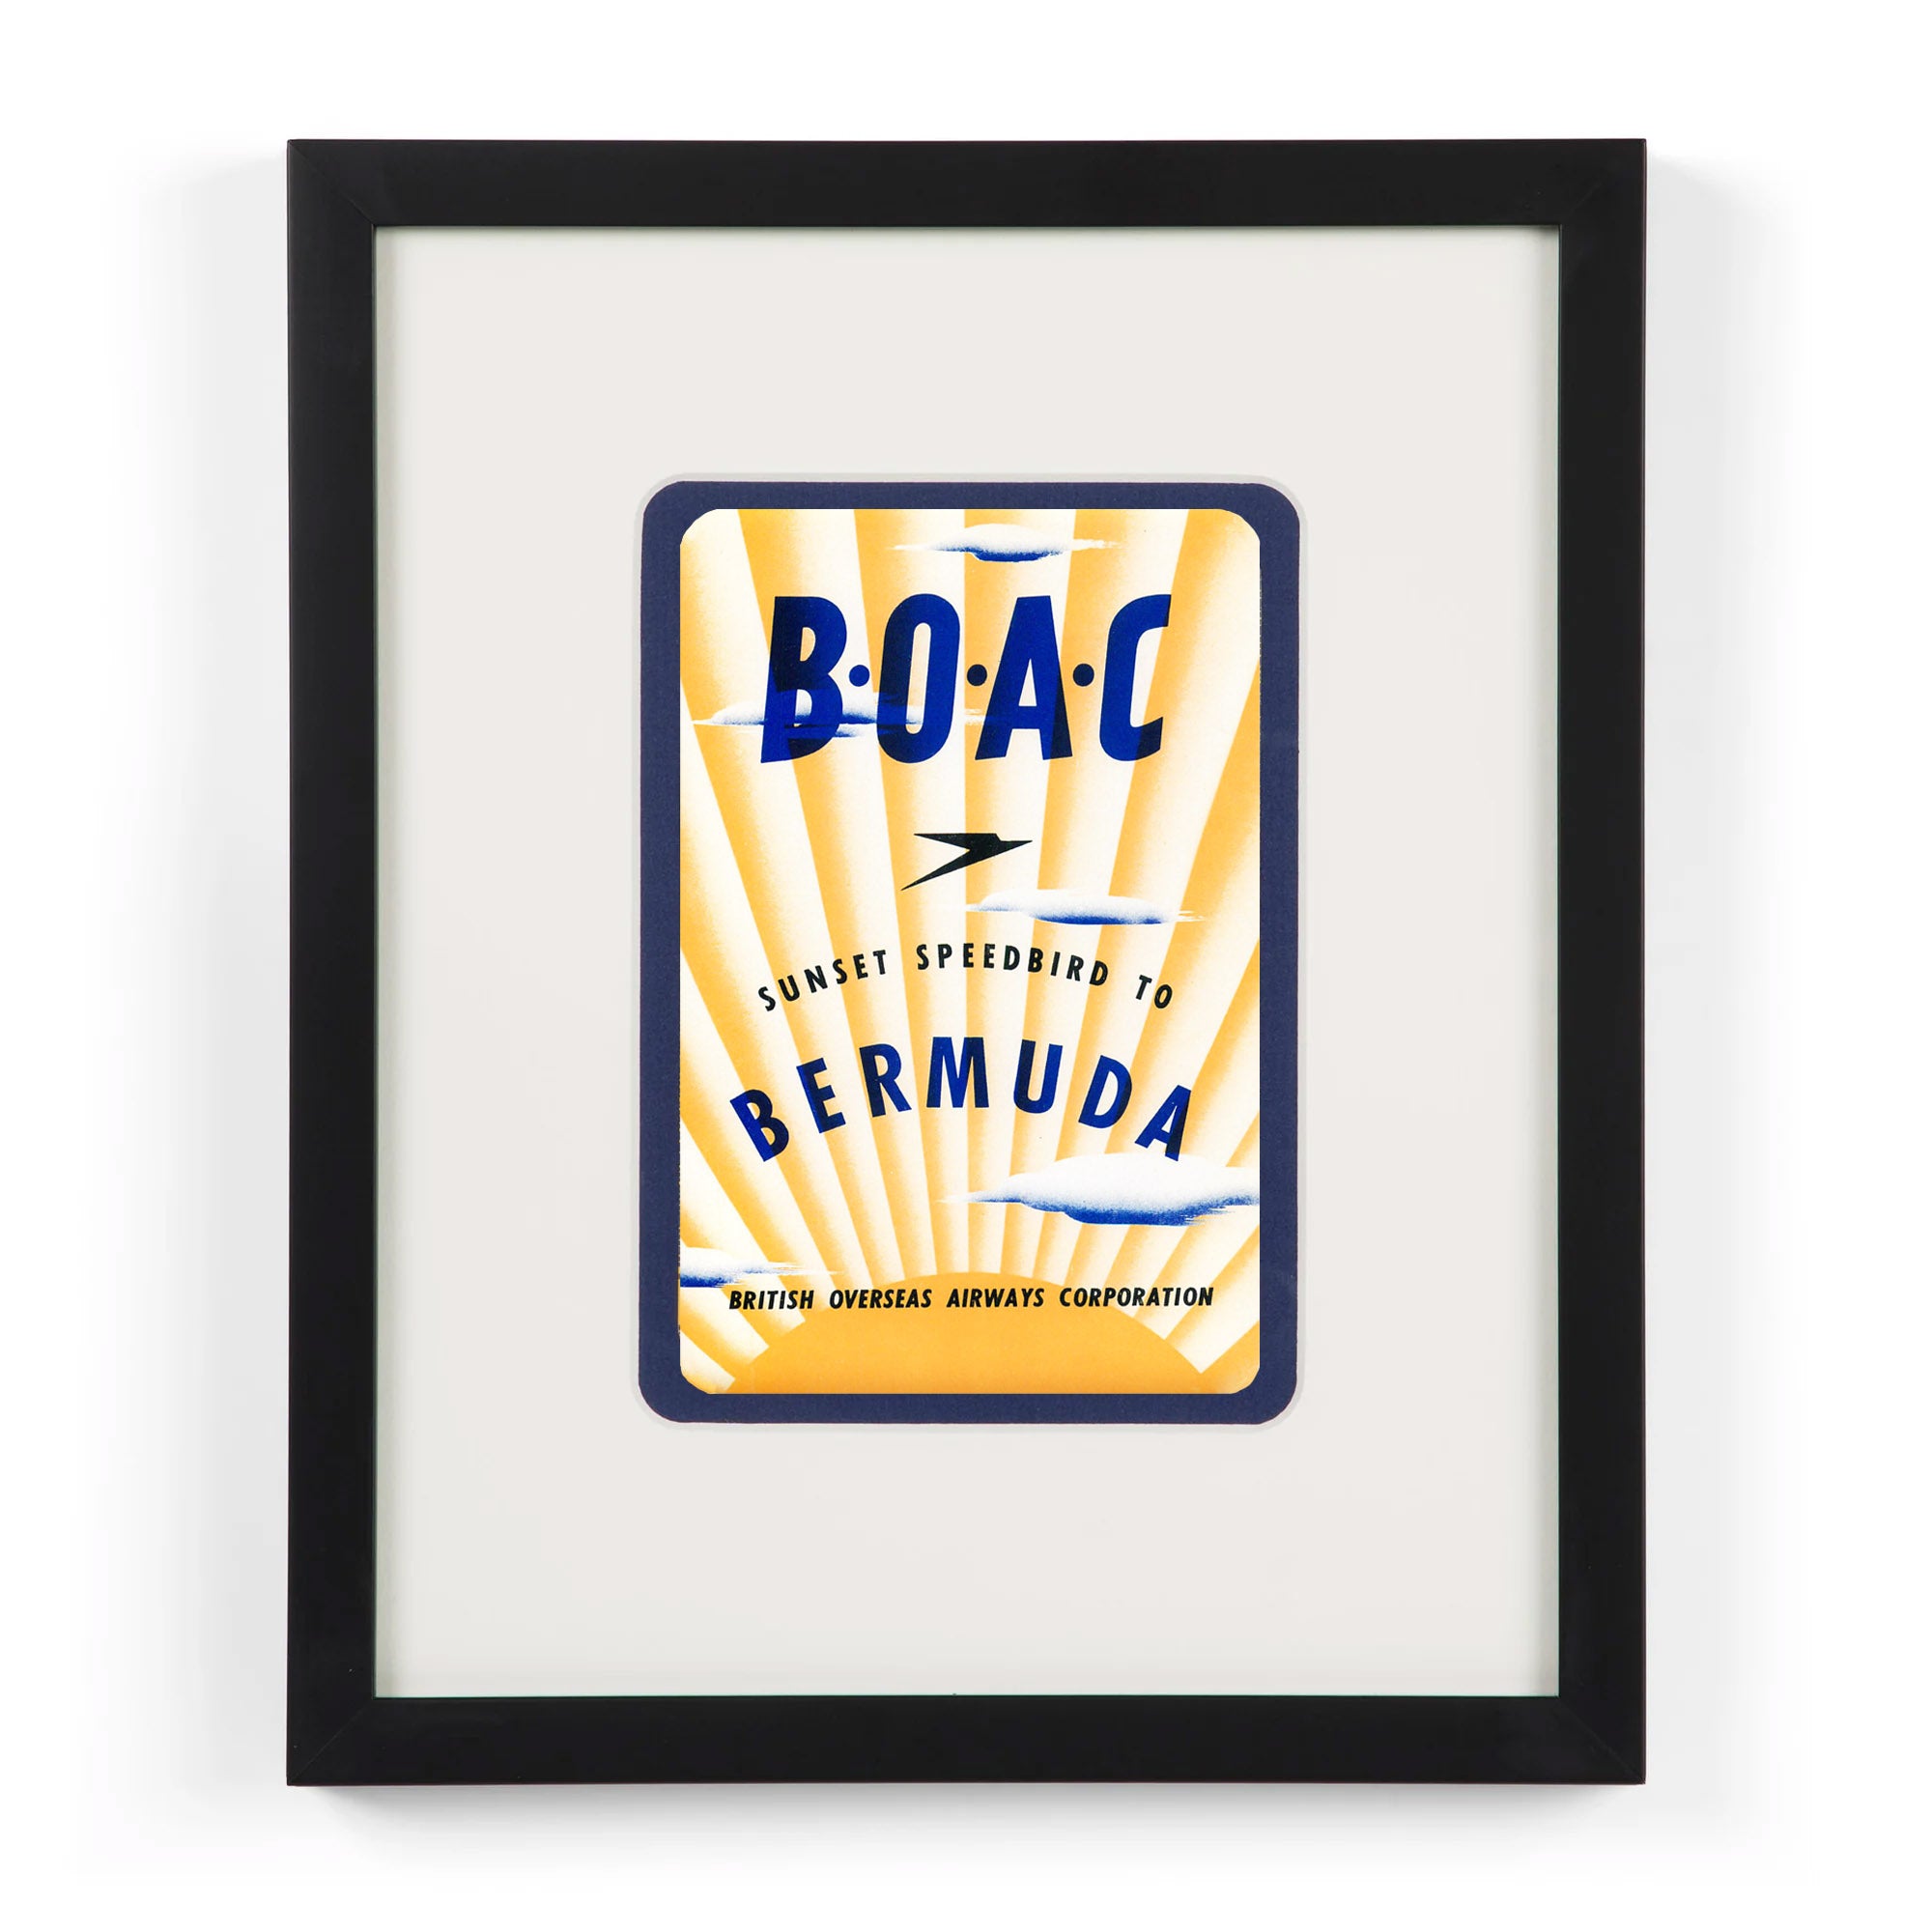 BOAC Sunset Speedbird to Bermuda Luggage Label